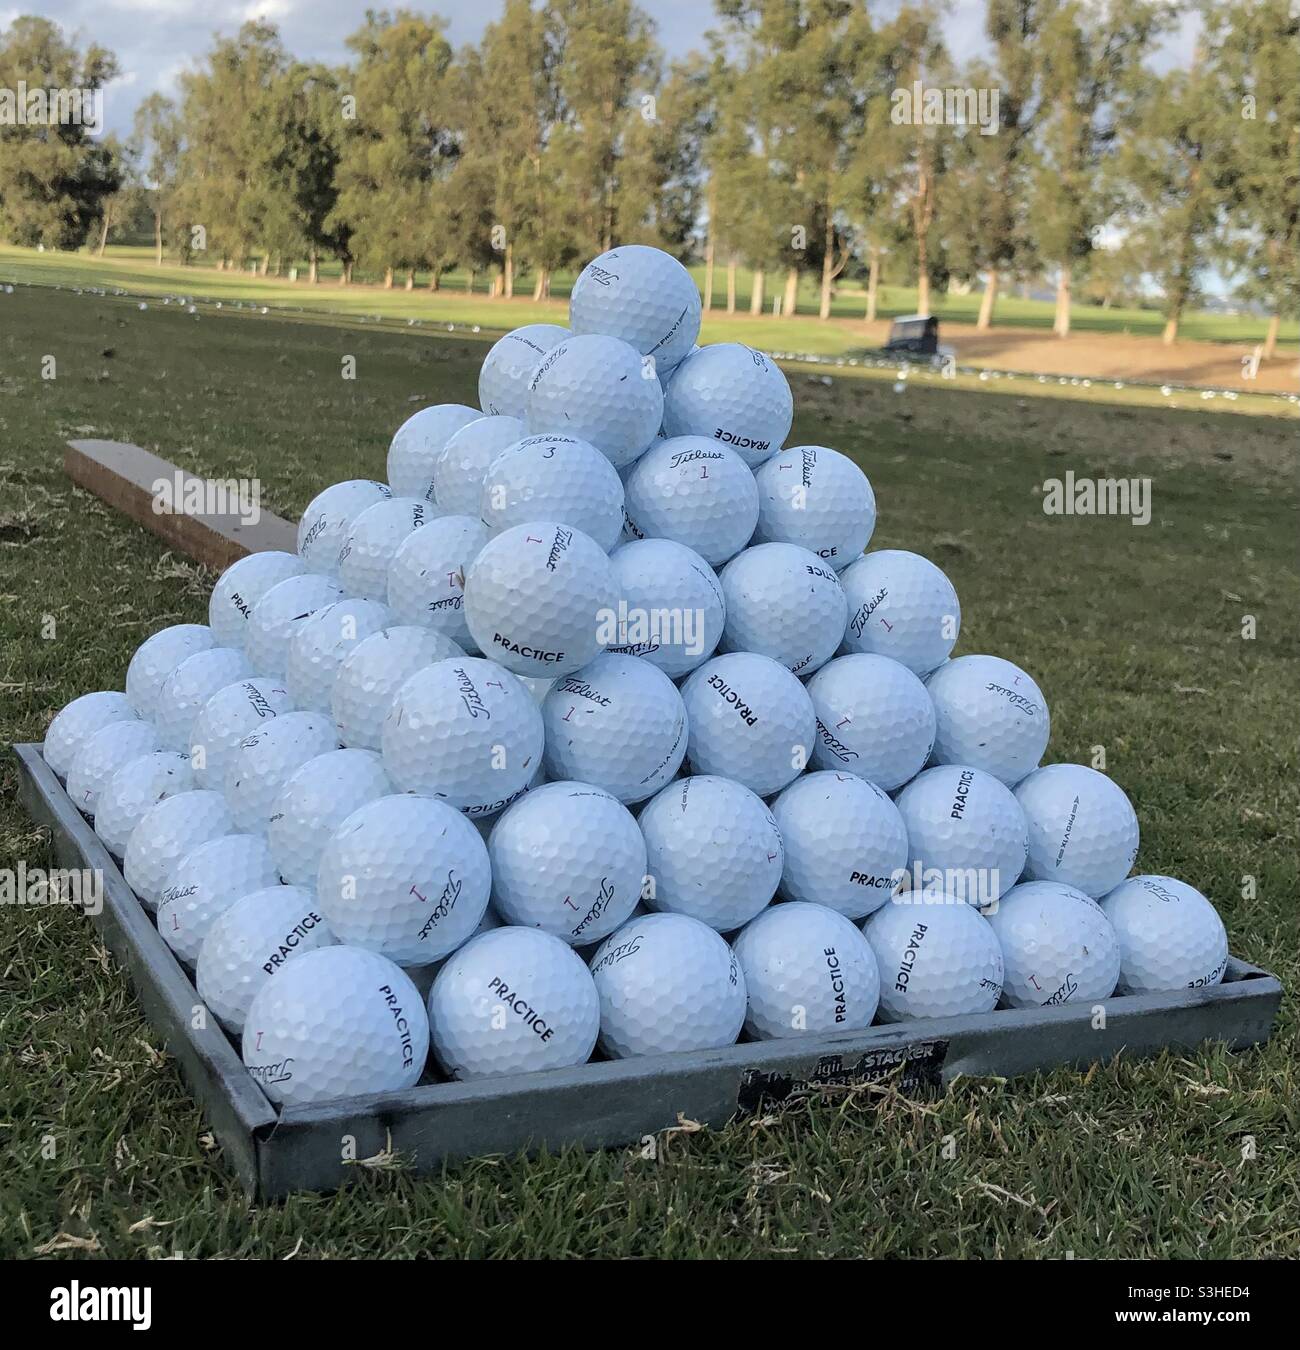 A pyramid of golf balls at the driving range Stock Photo - Alamy